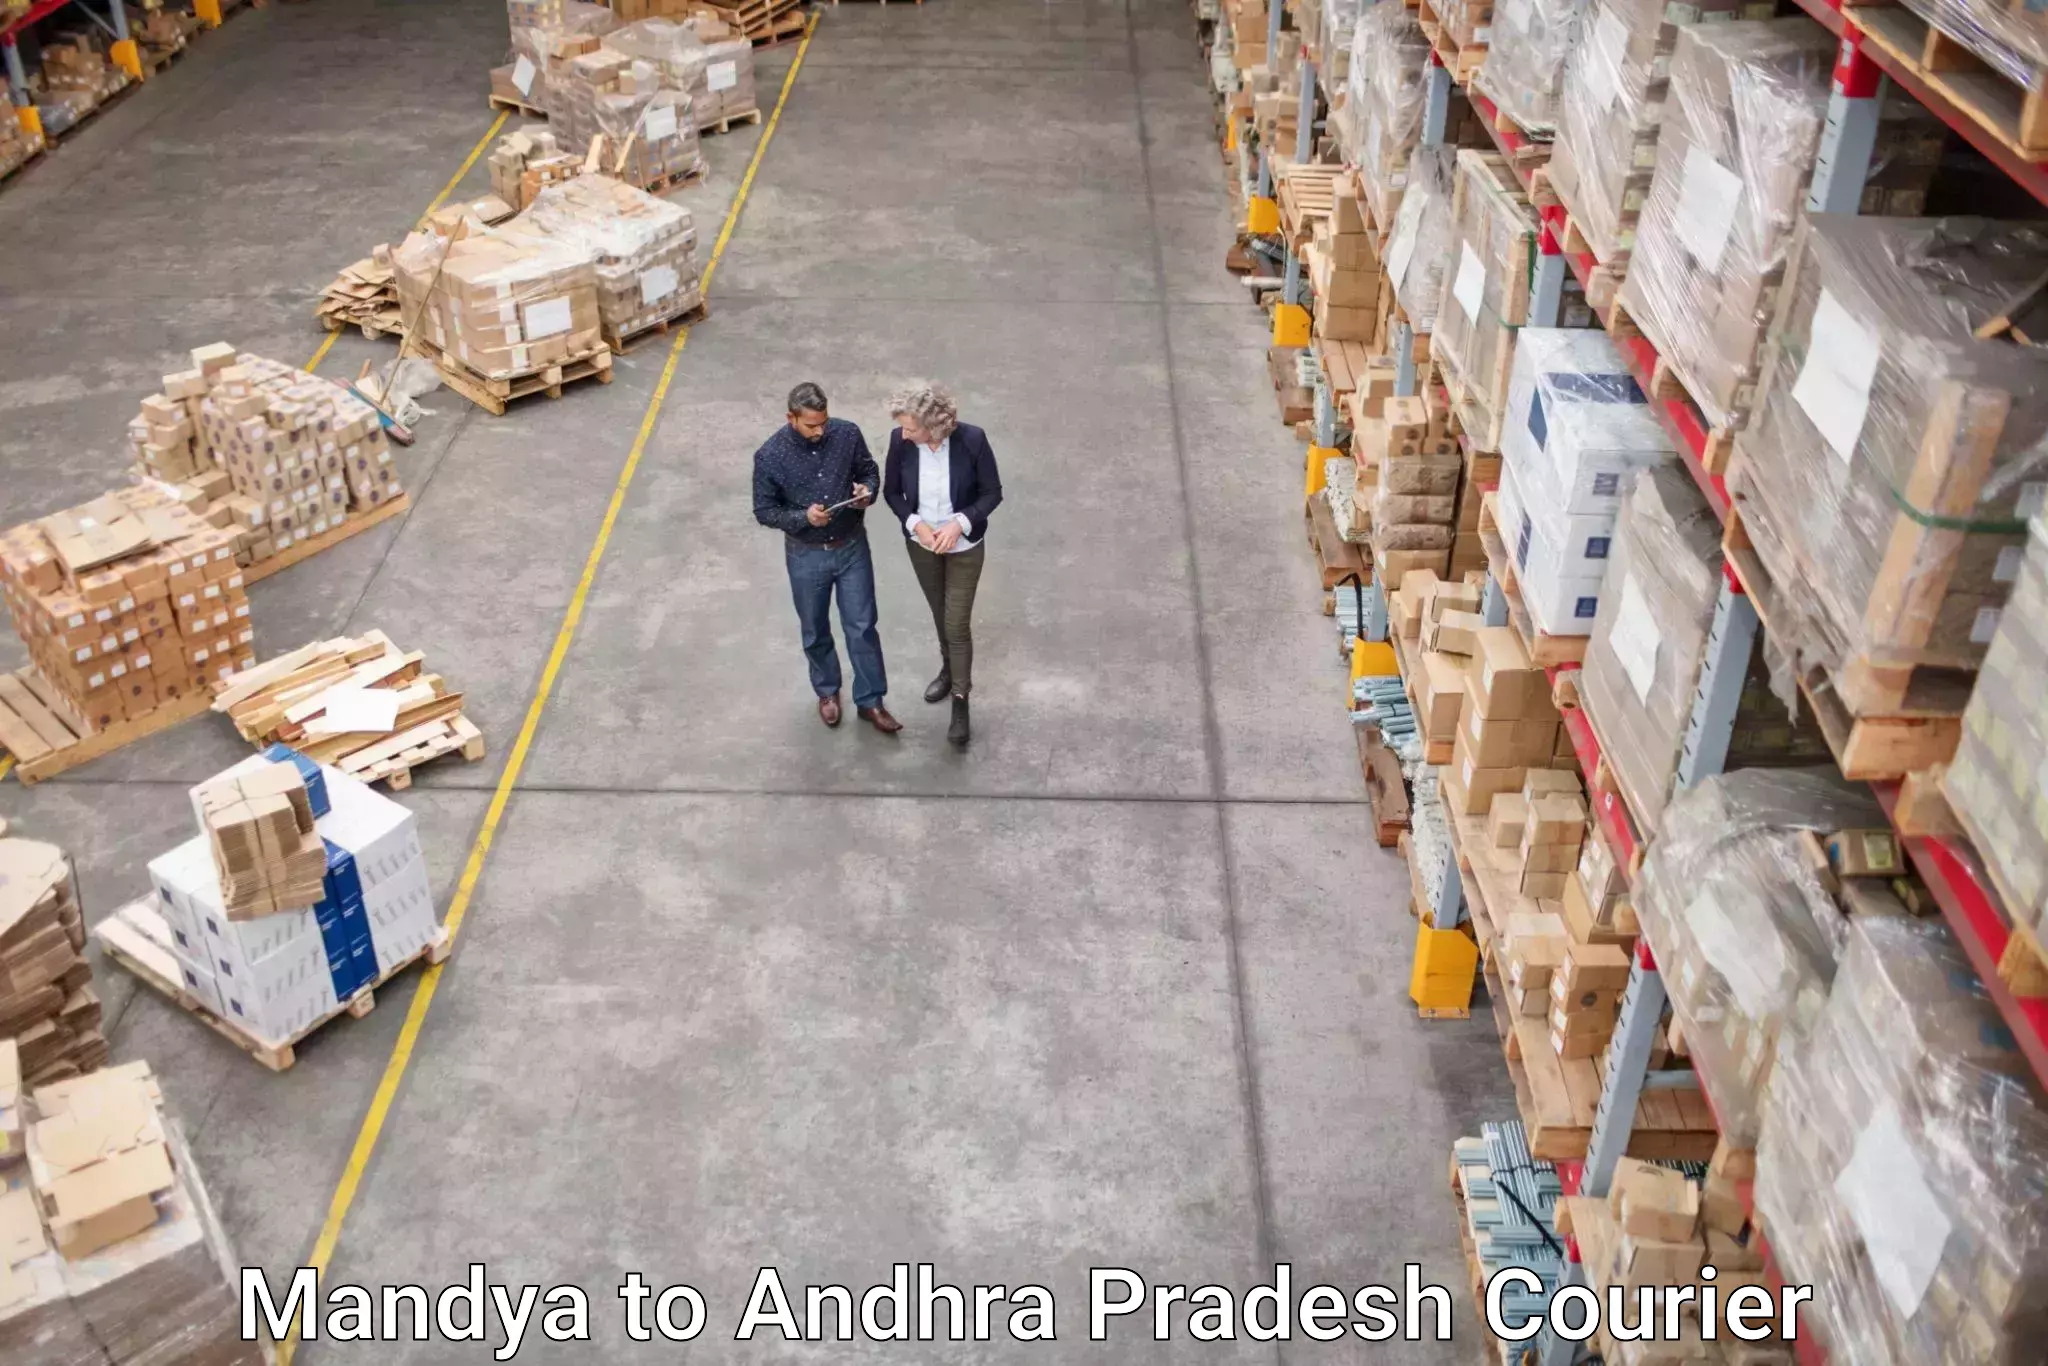 Global logistics network Mandya to Ramachandrapuram